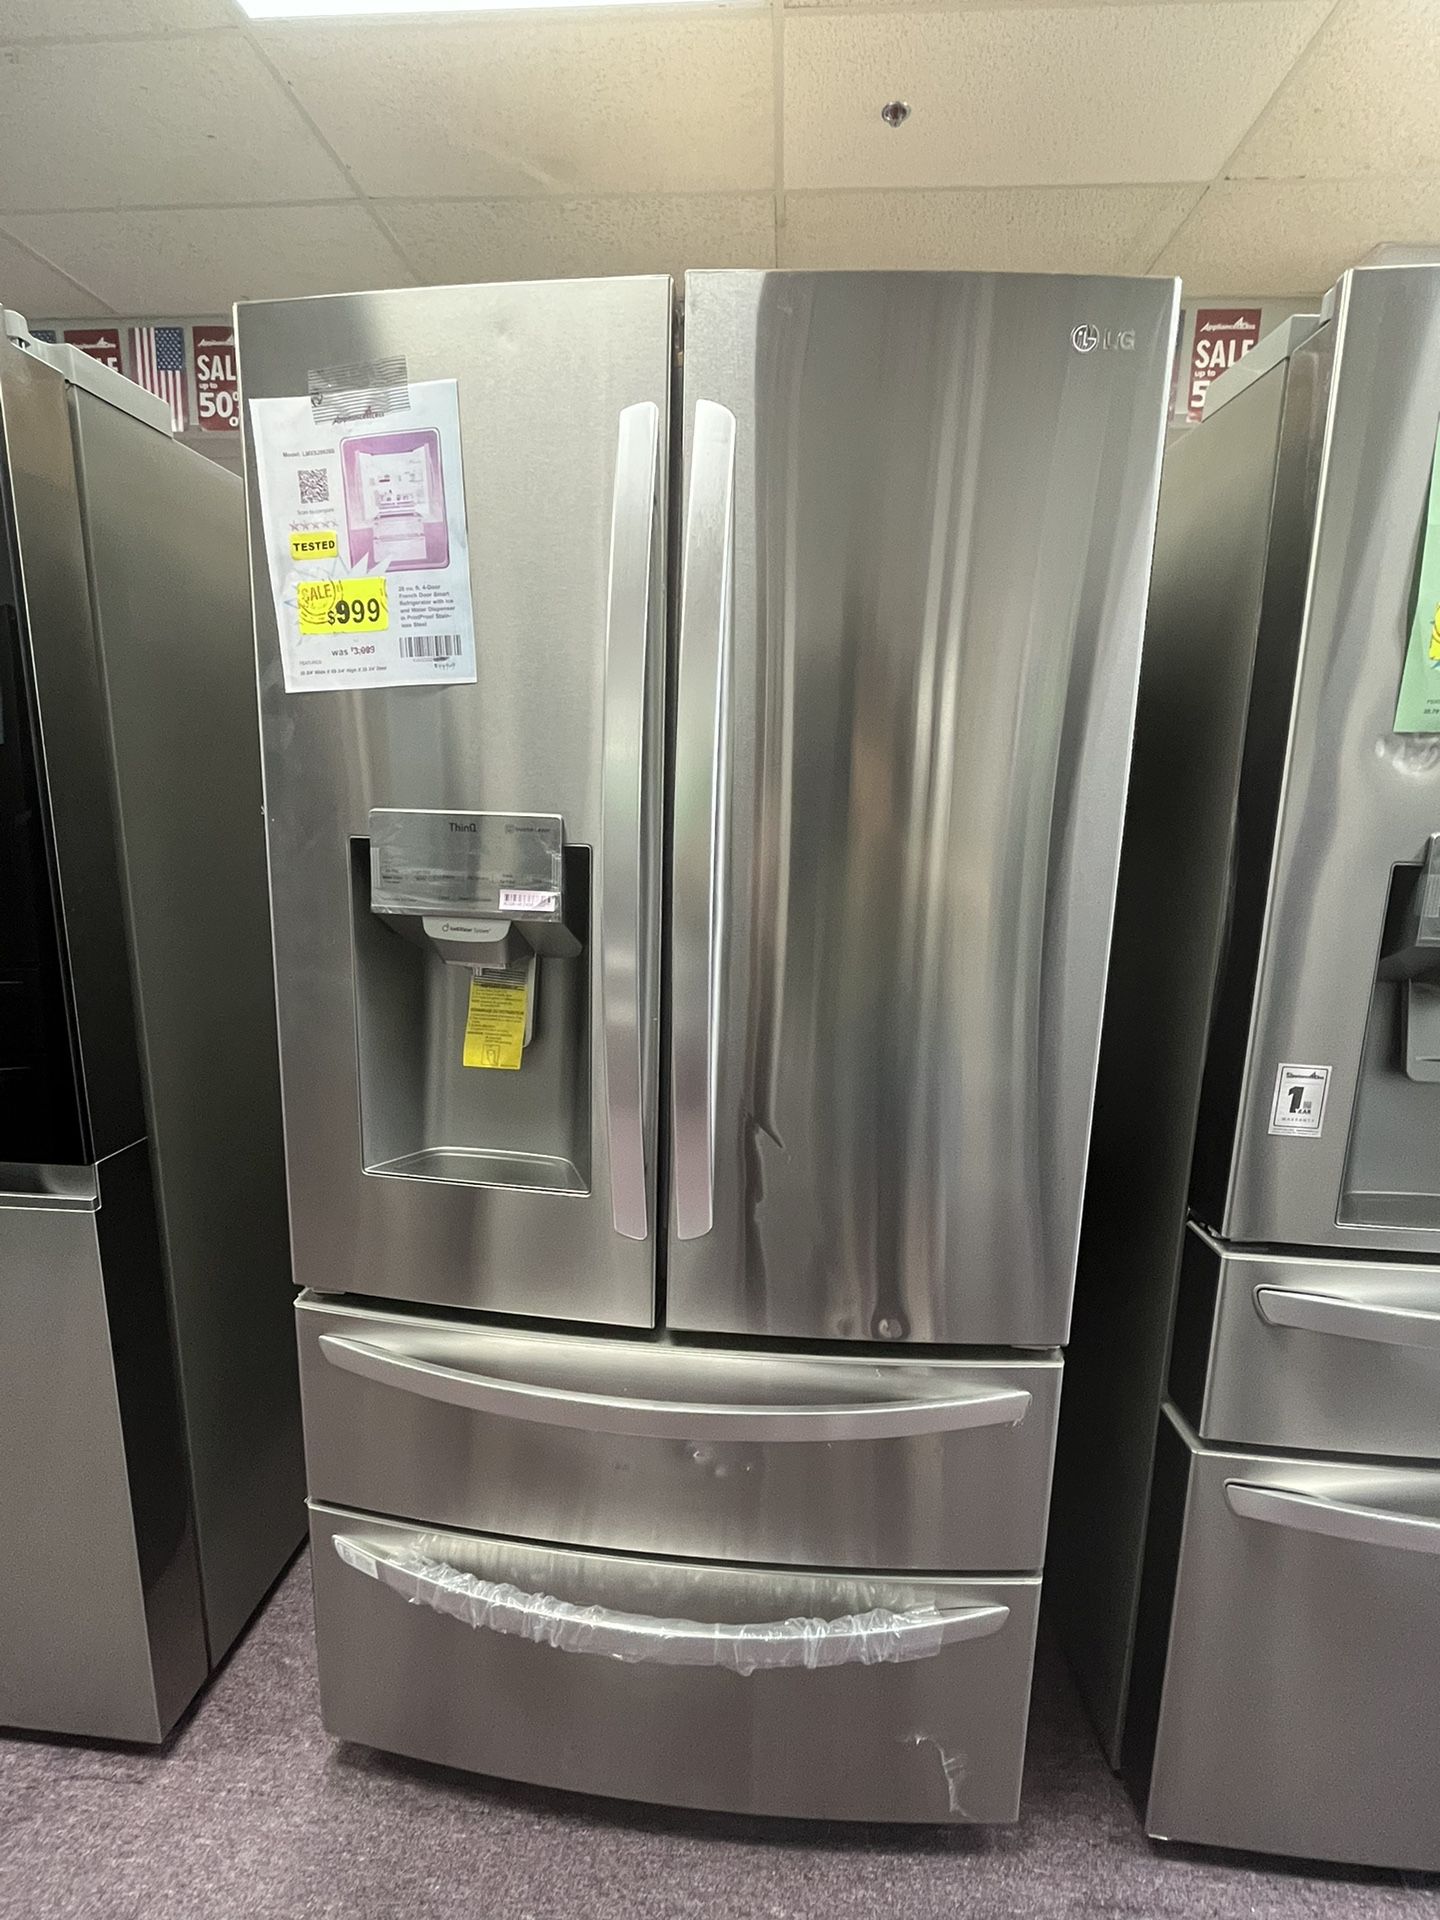 Refrigerator-LG Open Box Fridge 4 Door With 1 Year Warranty Delivery Service 